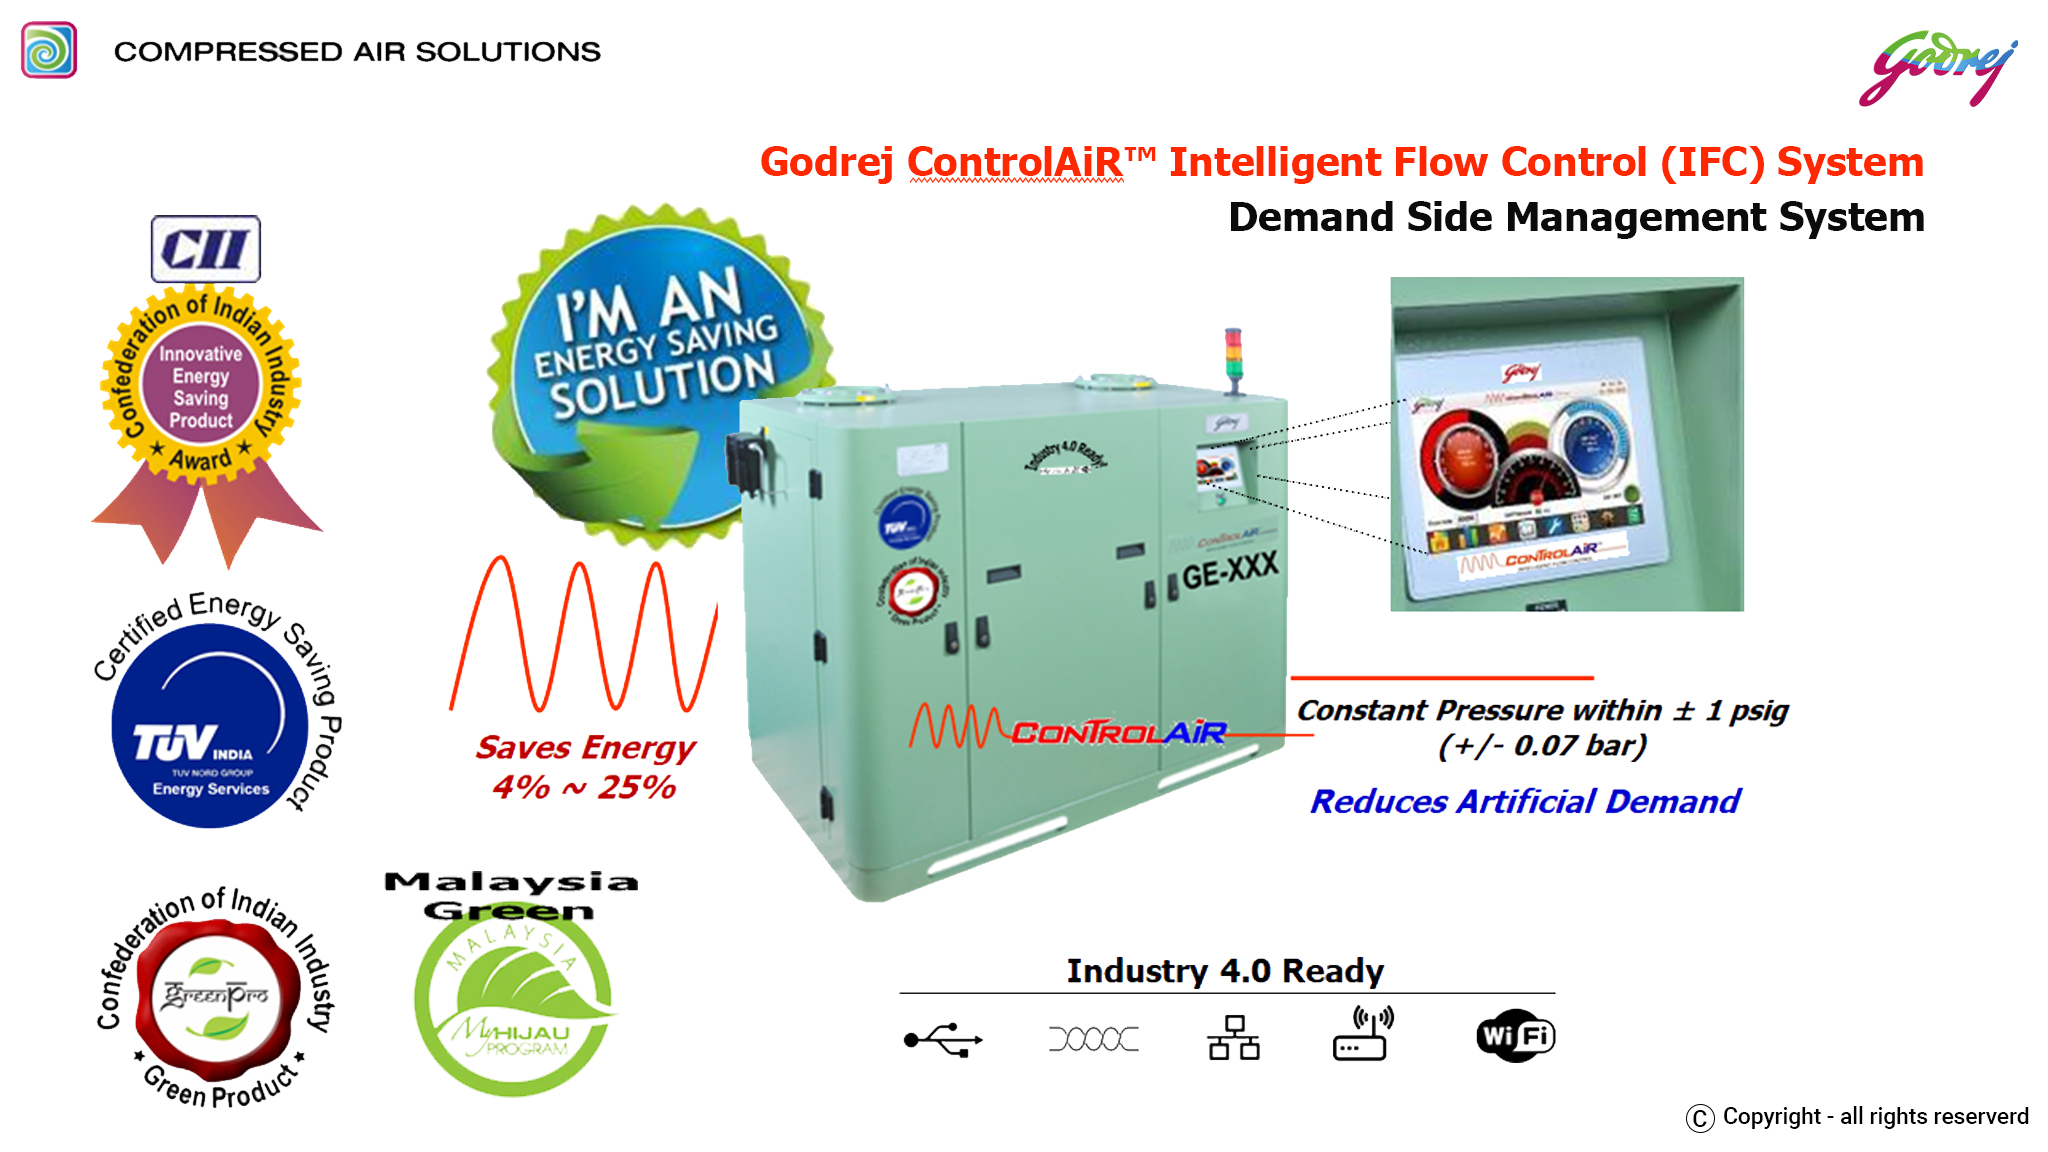 Godrej ControlAir Intelligent Flow Control (IFC) System-ENERGY SAVING SOLUTIONS IN COMPRESSED AIR NETWORK (GODREJ)